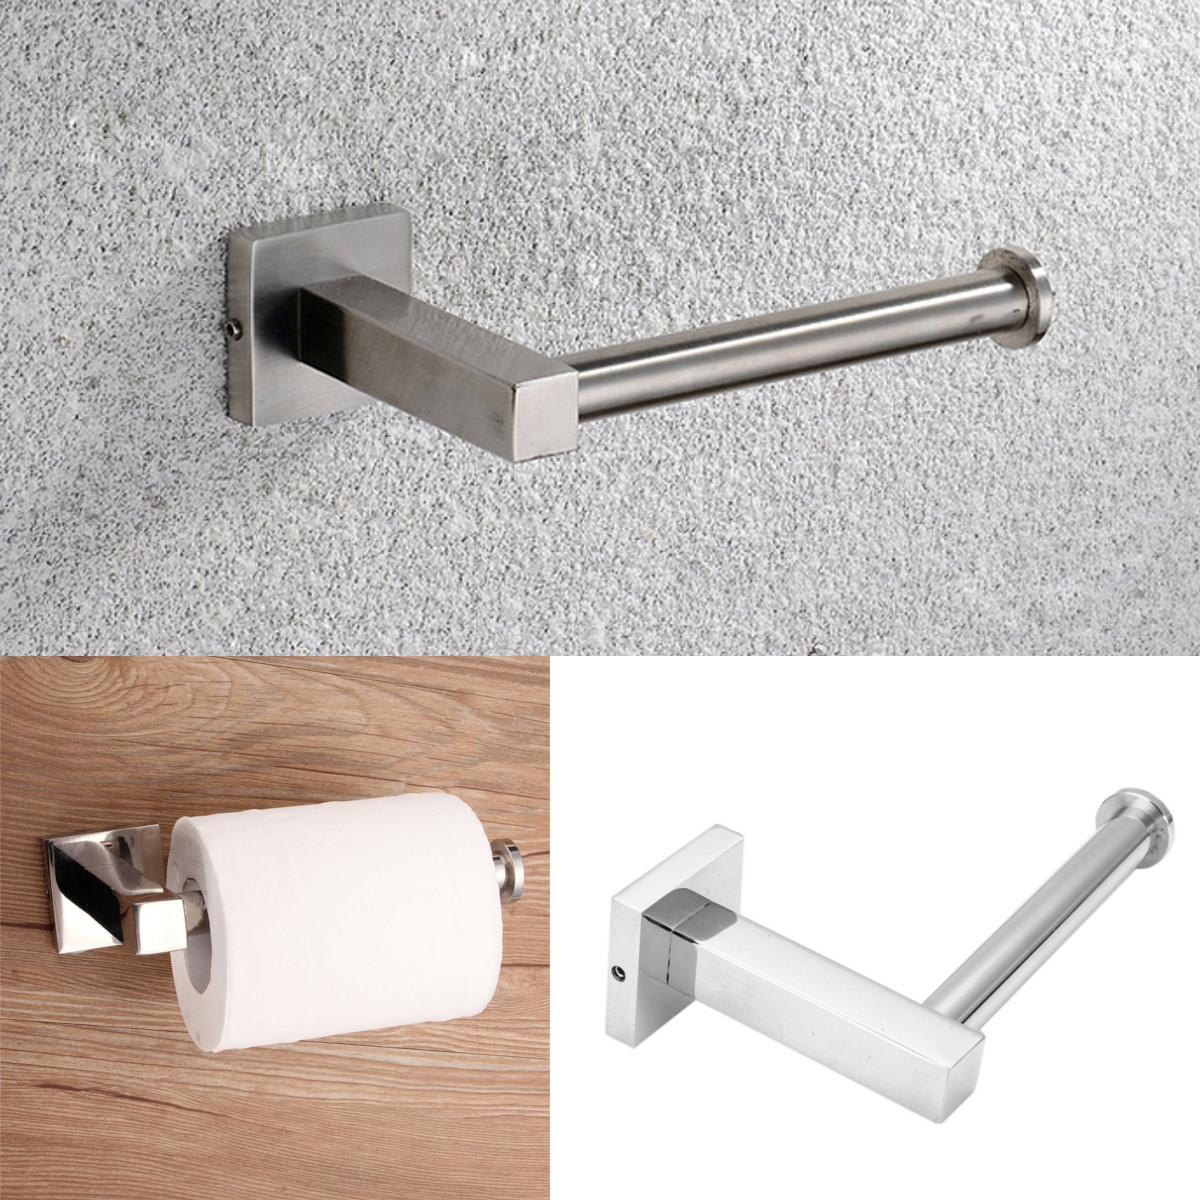 Best ideas about Bathroom Tissue Holder
. Save or Pin Stainless Steel Bathroom Tissue Holder Wall Mount Toilet Now.